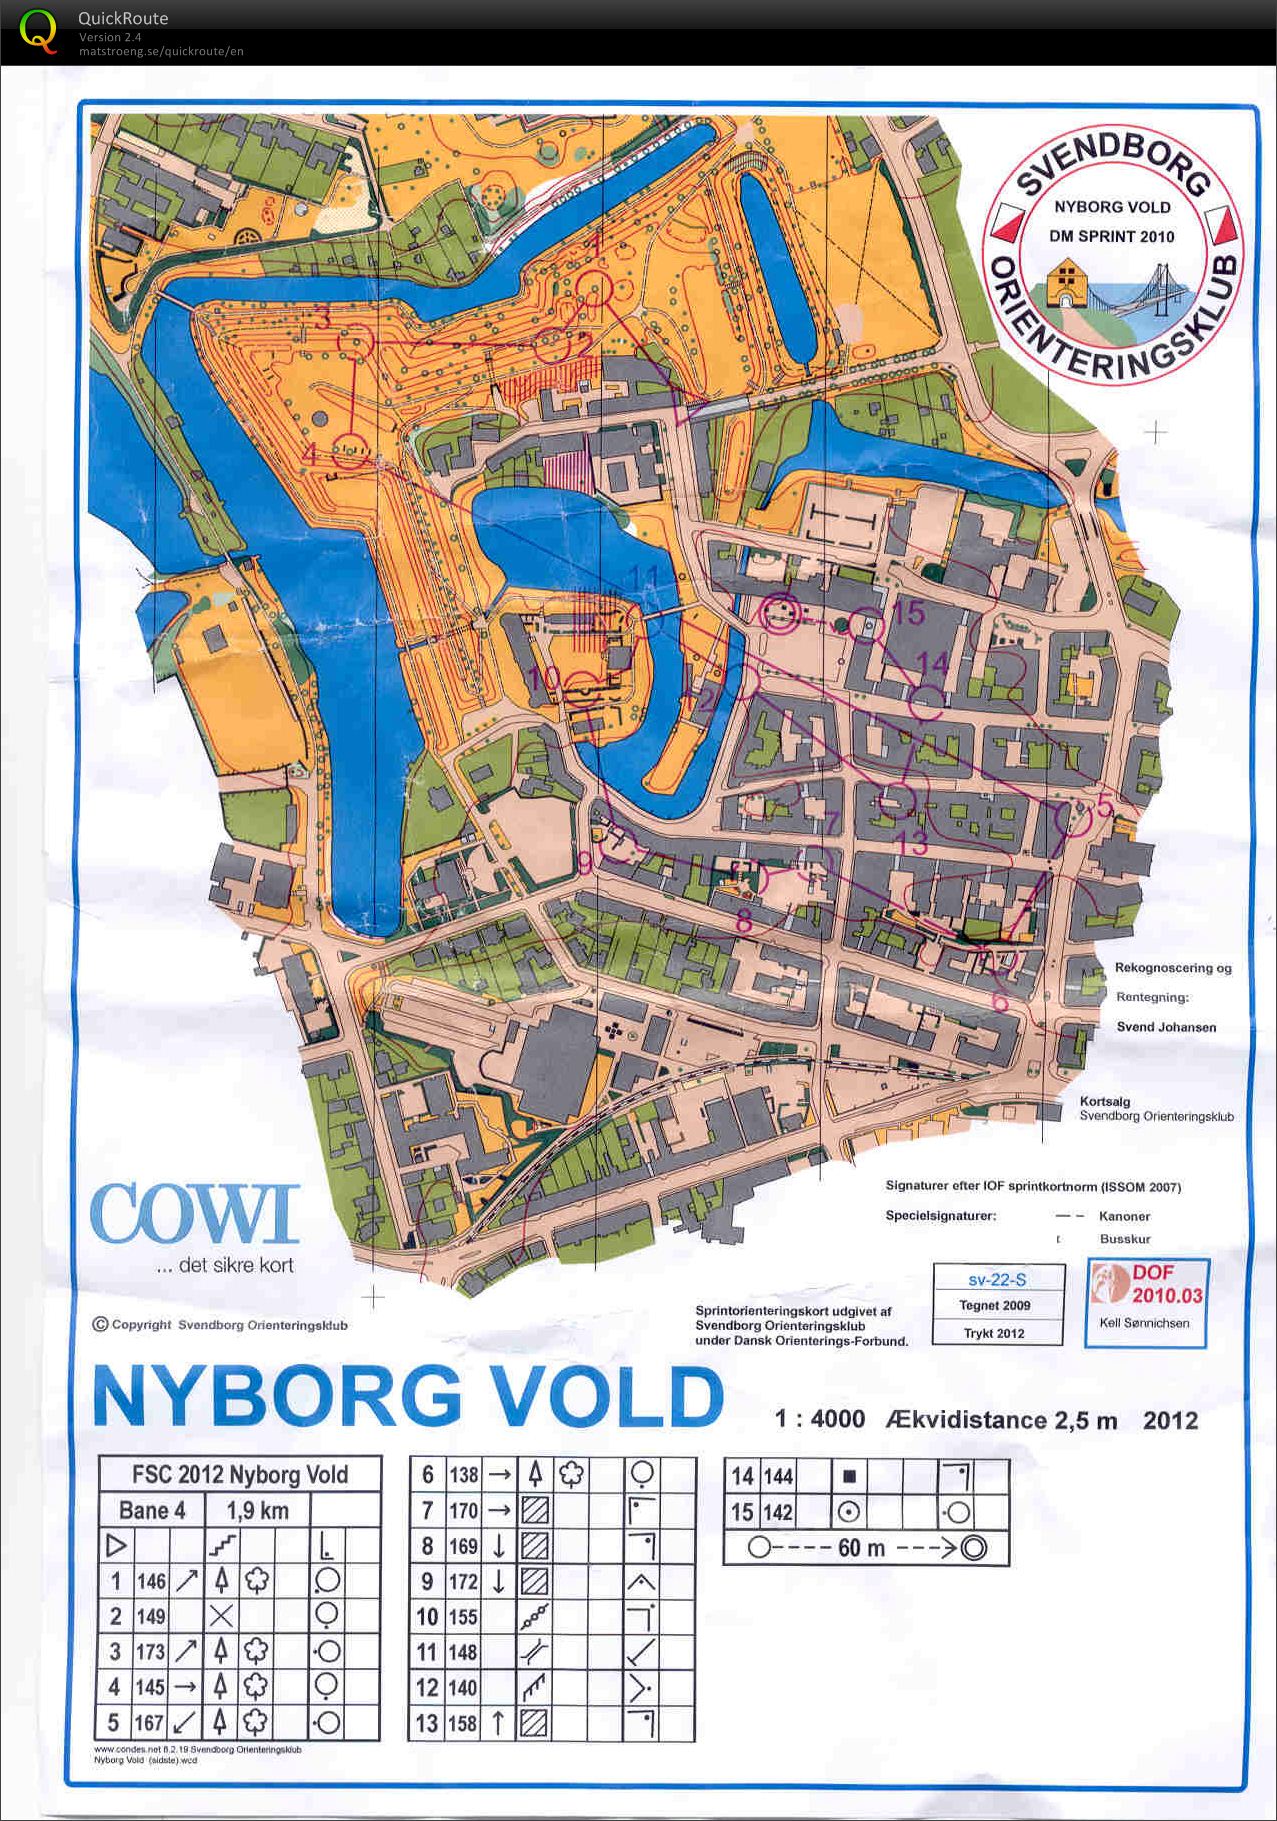 Nyborg Vold, Bane 4, D55, Pia Gade, 280512 (28-05-2012)